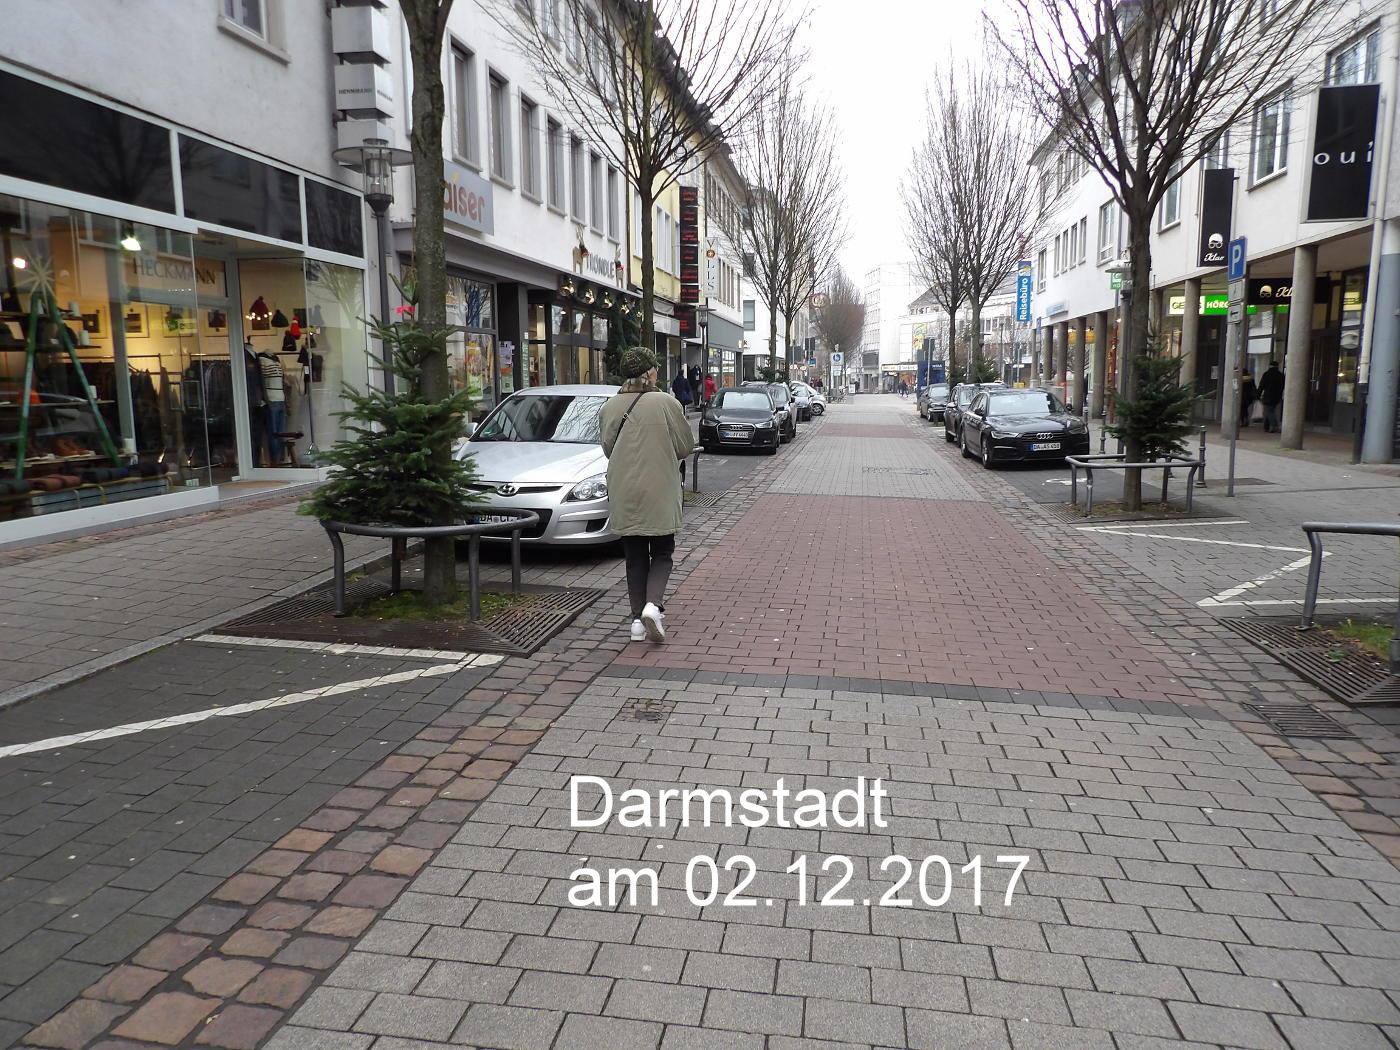 Darmstadt: No Cannibalism – Jehovah's Witnesses Deny, Deny, Deny